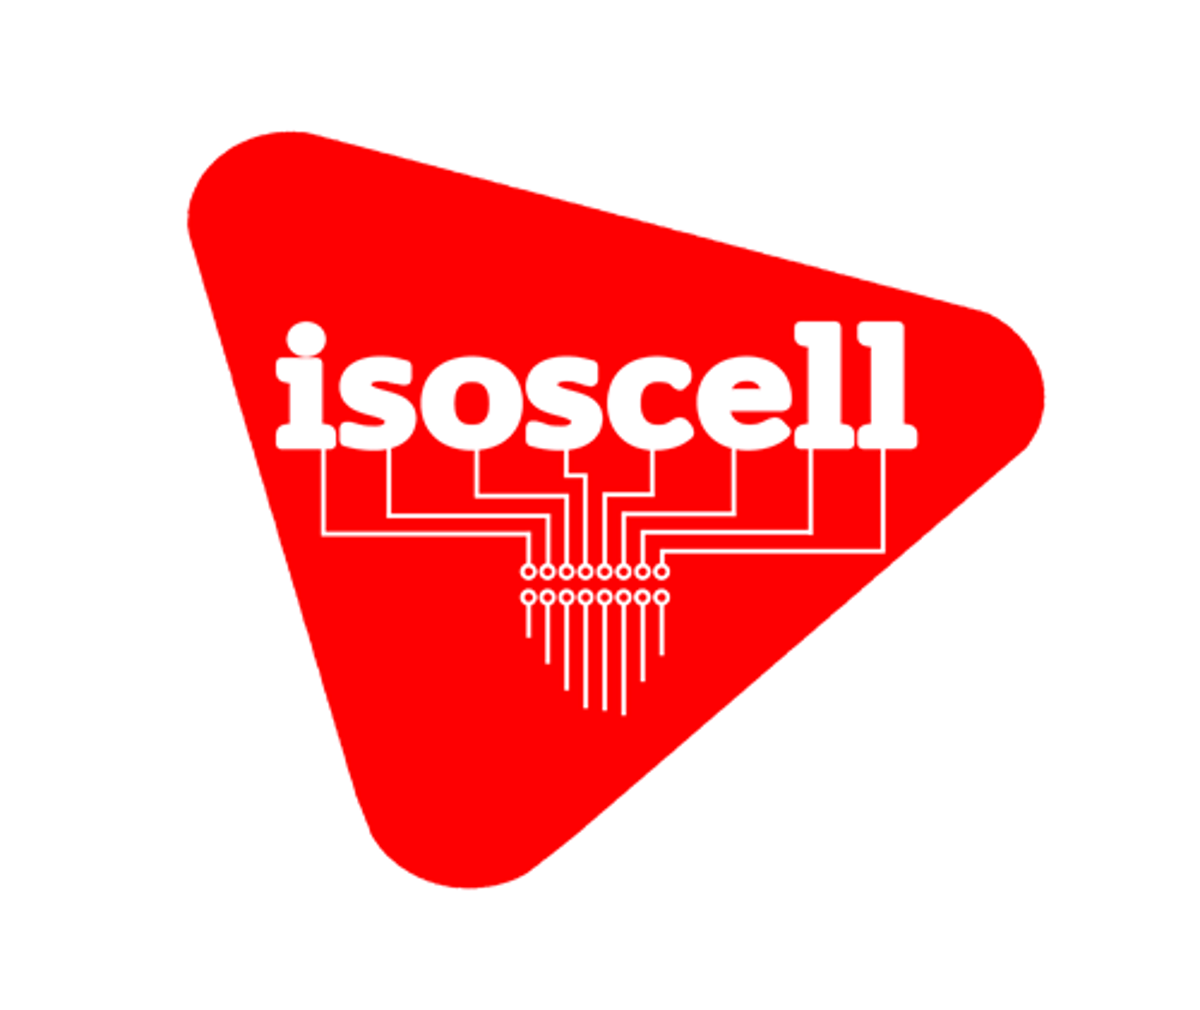 www.isoscell.com